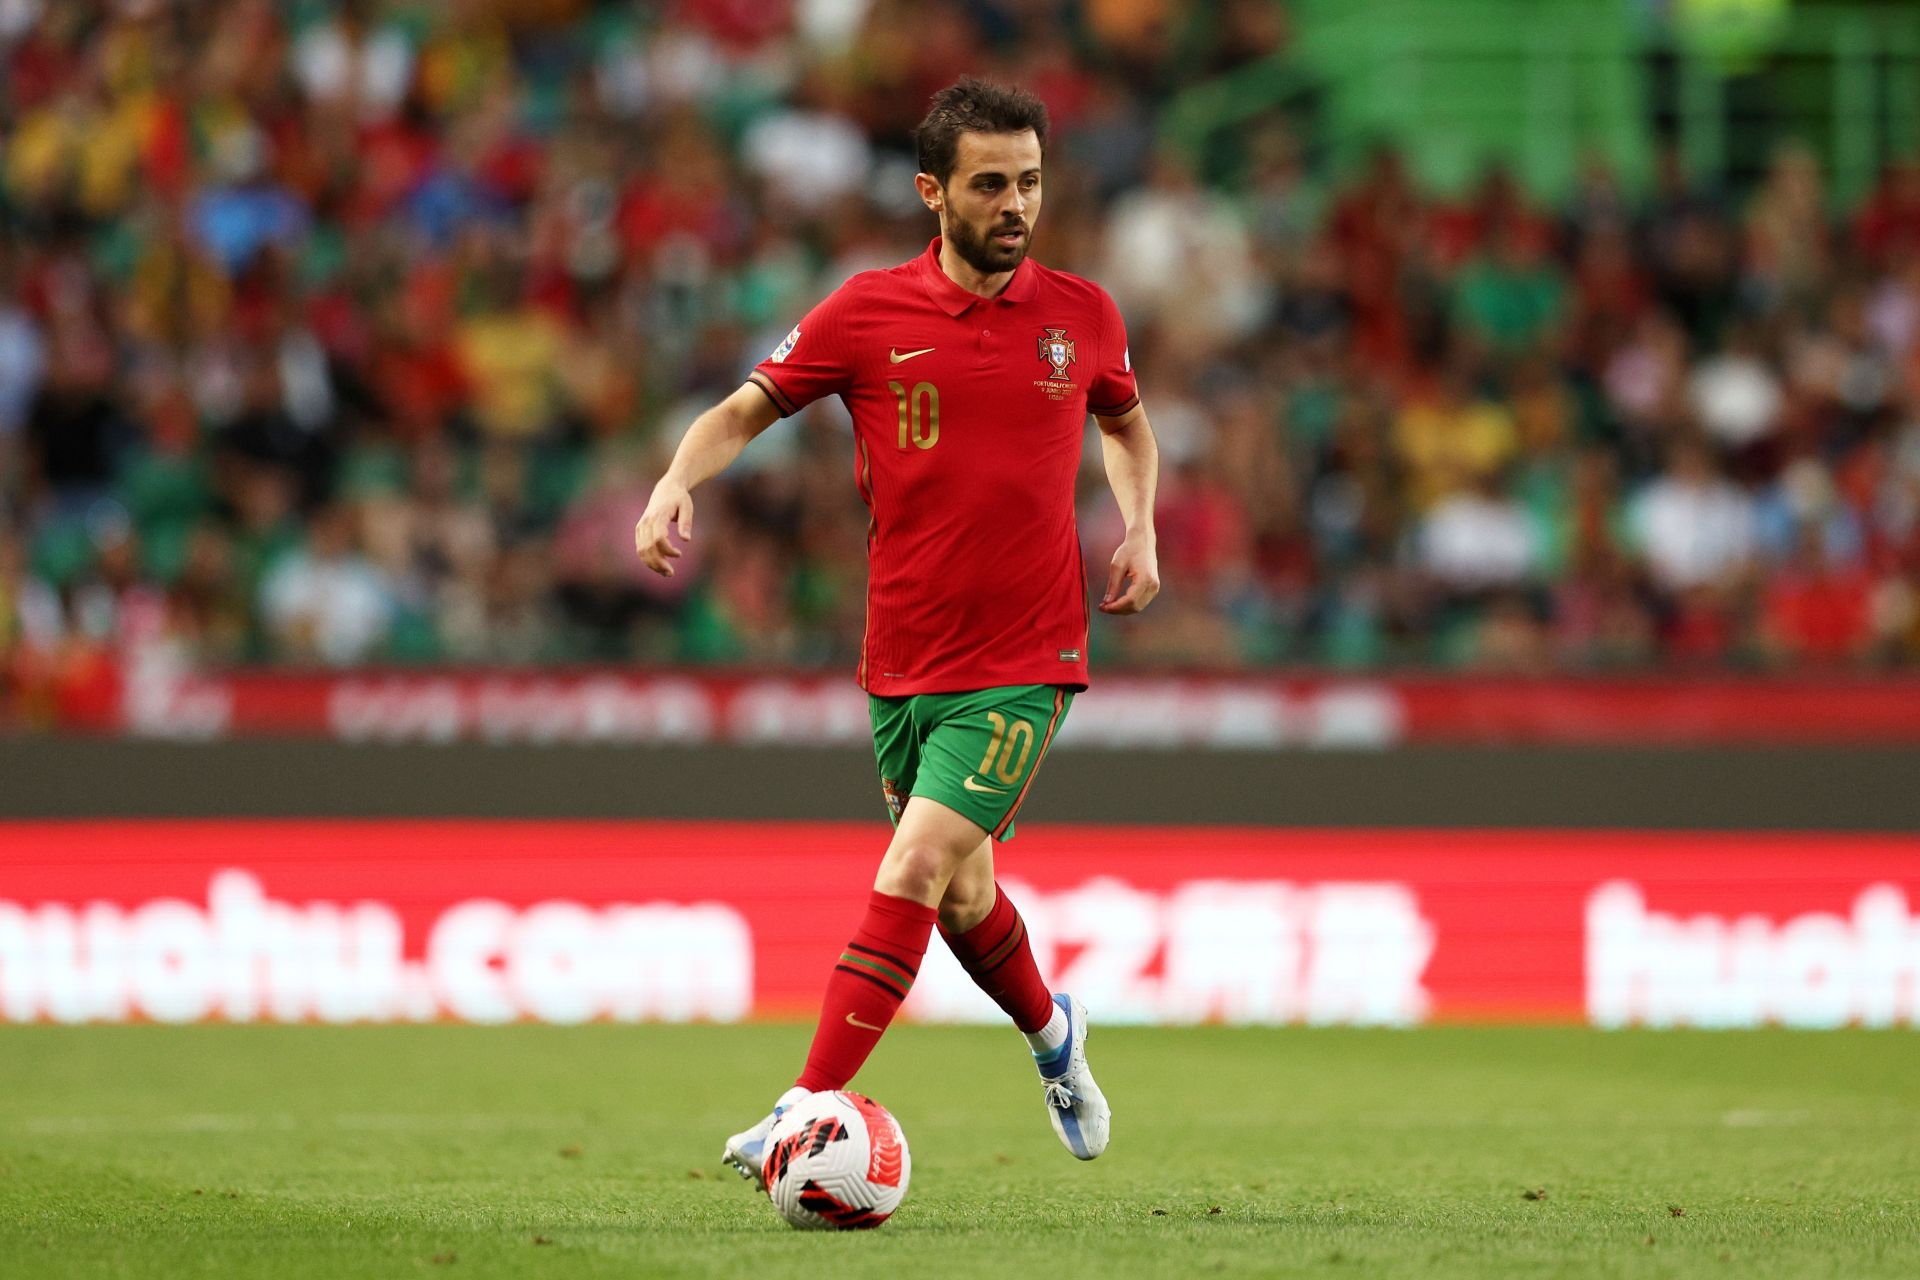 Bernardo Silva is currently on international duty with Portugal